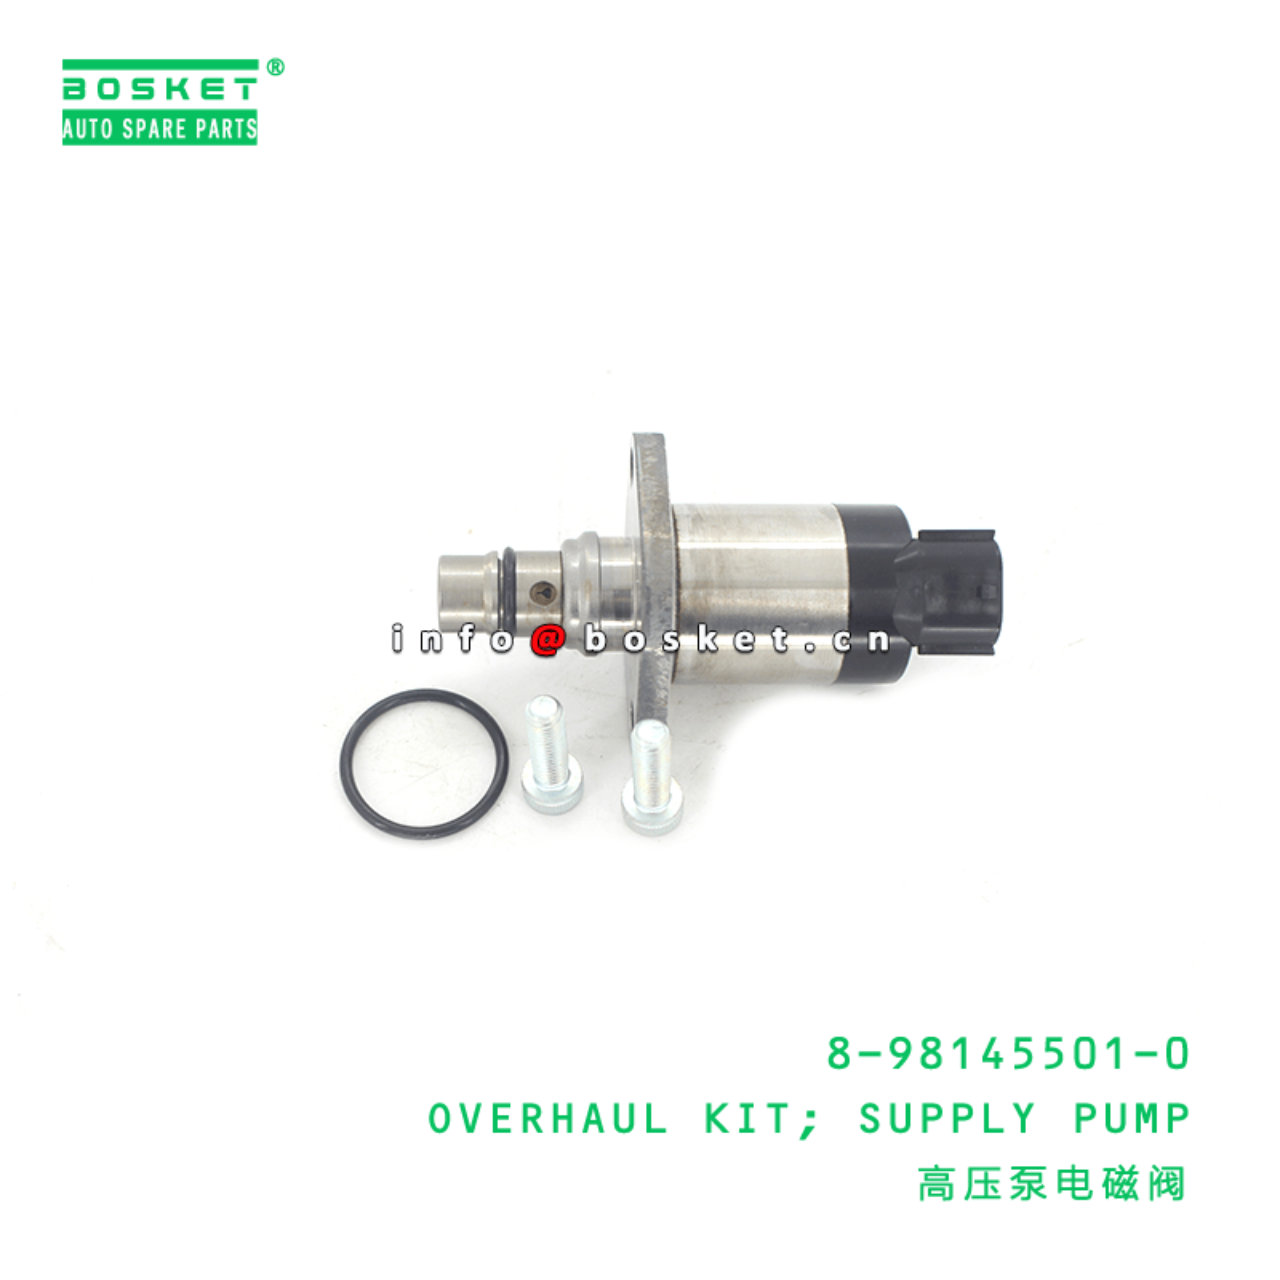 8-98145501-0 Supply Pump Overhaul Kit 8981455010 Suitable for ISUZU 700P 4HK1